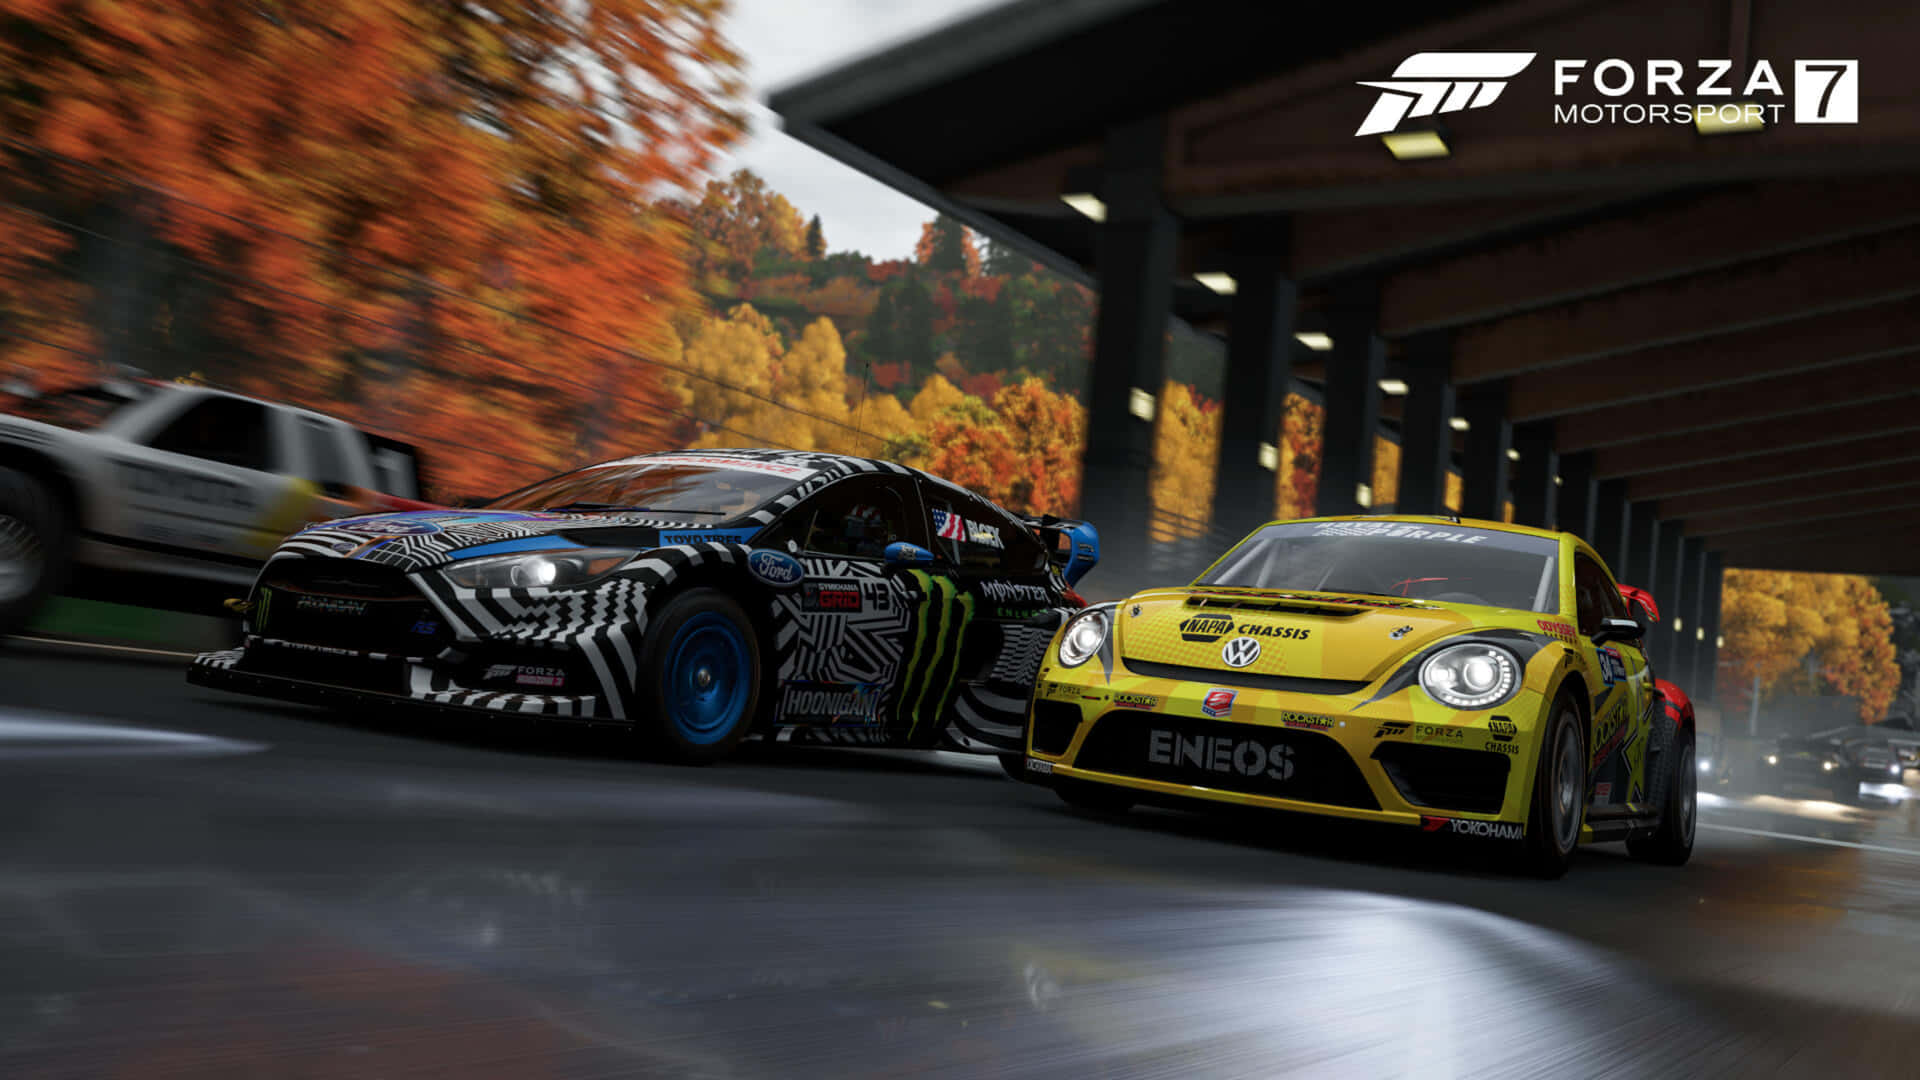 4kbakgrund Med Forza Motorsport 7 Racing Race Cars